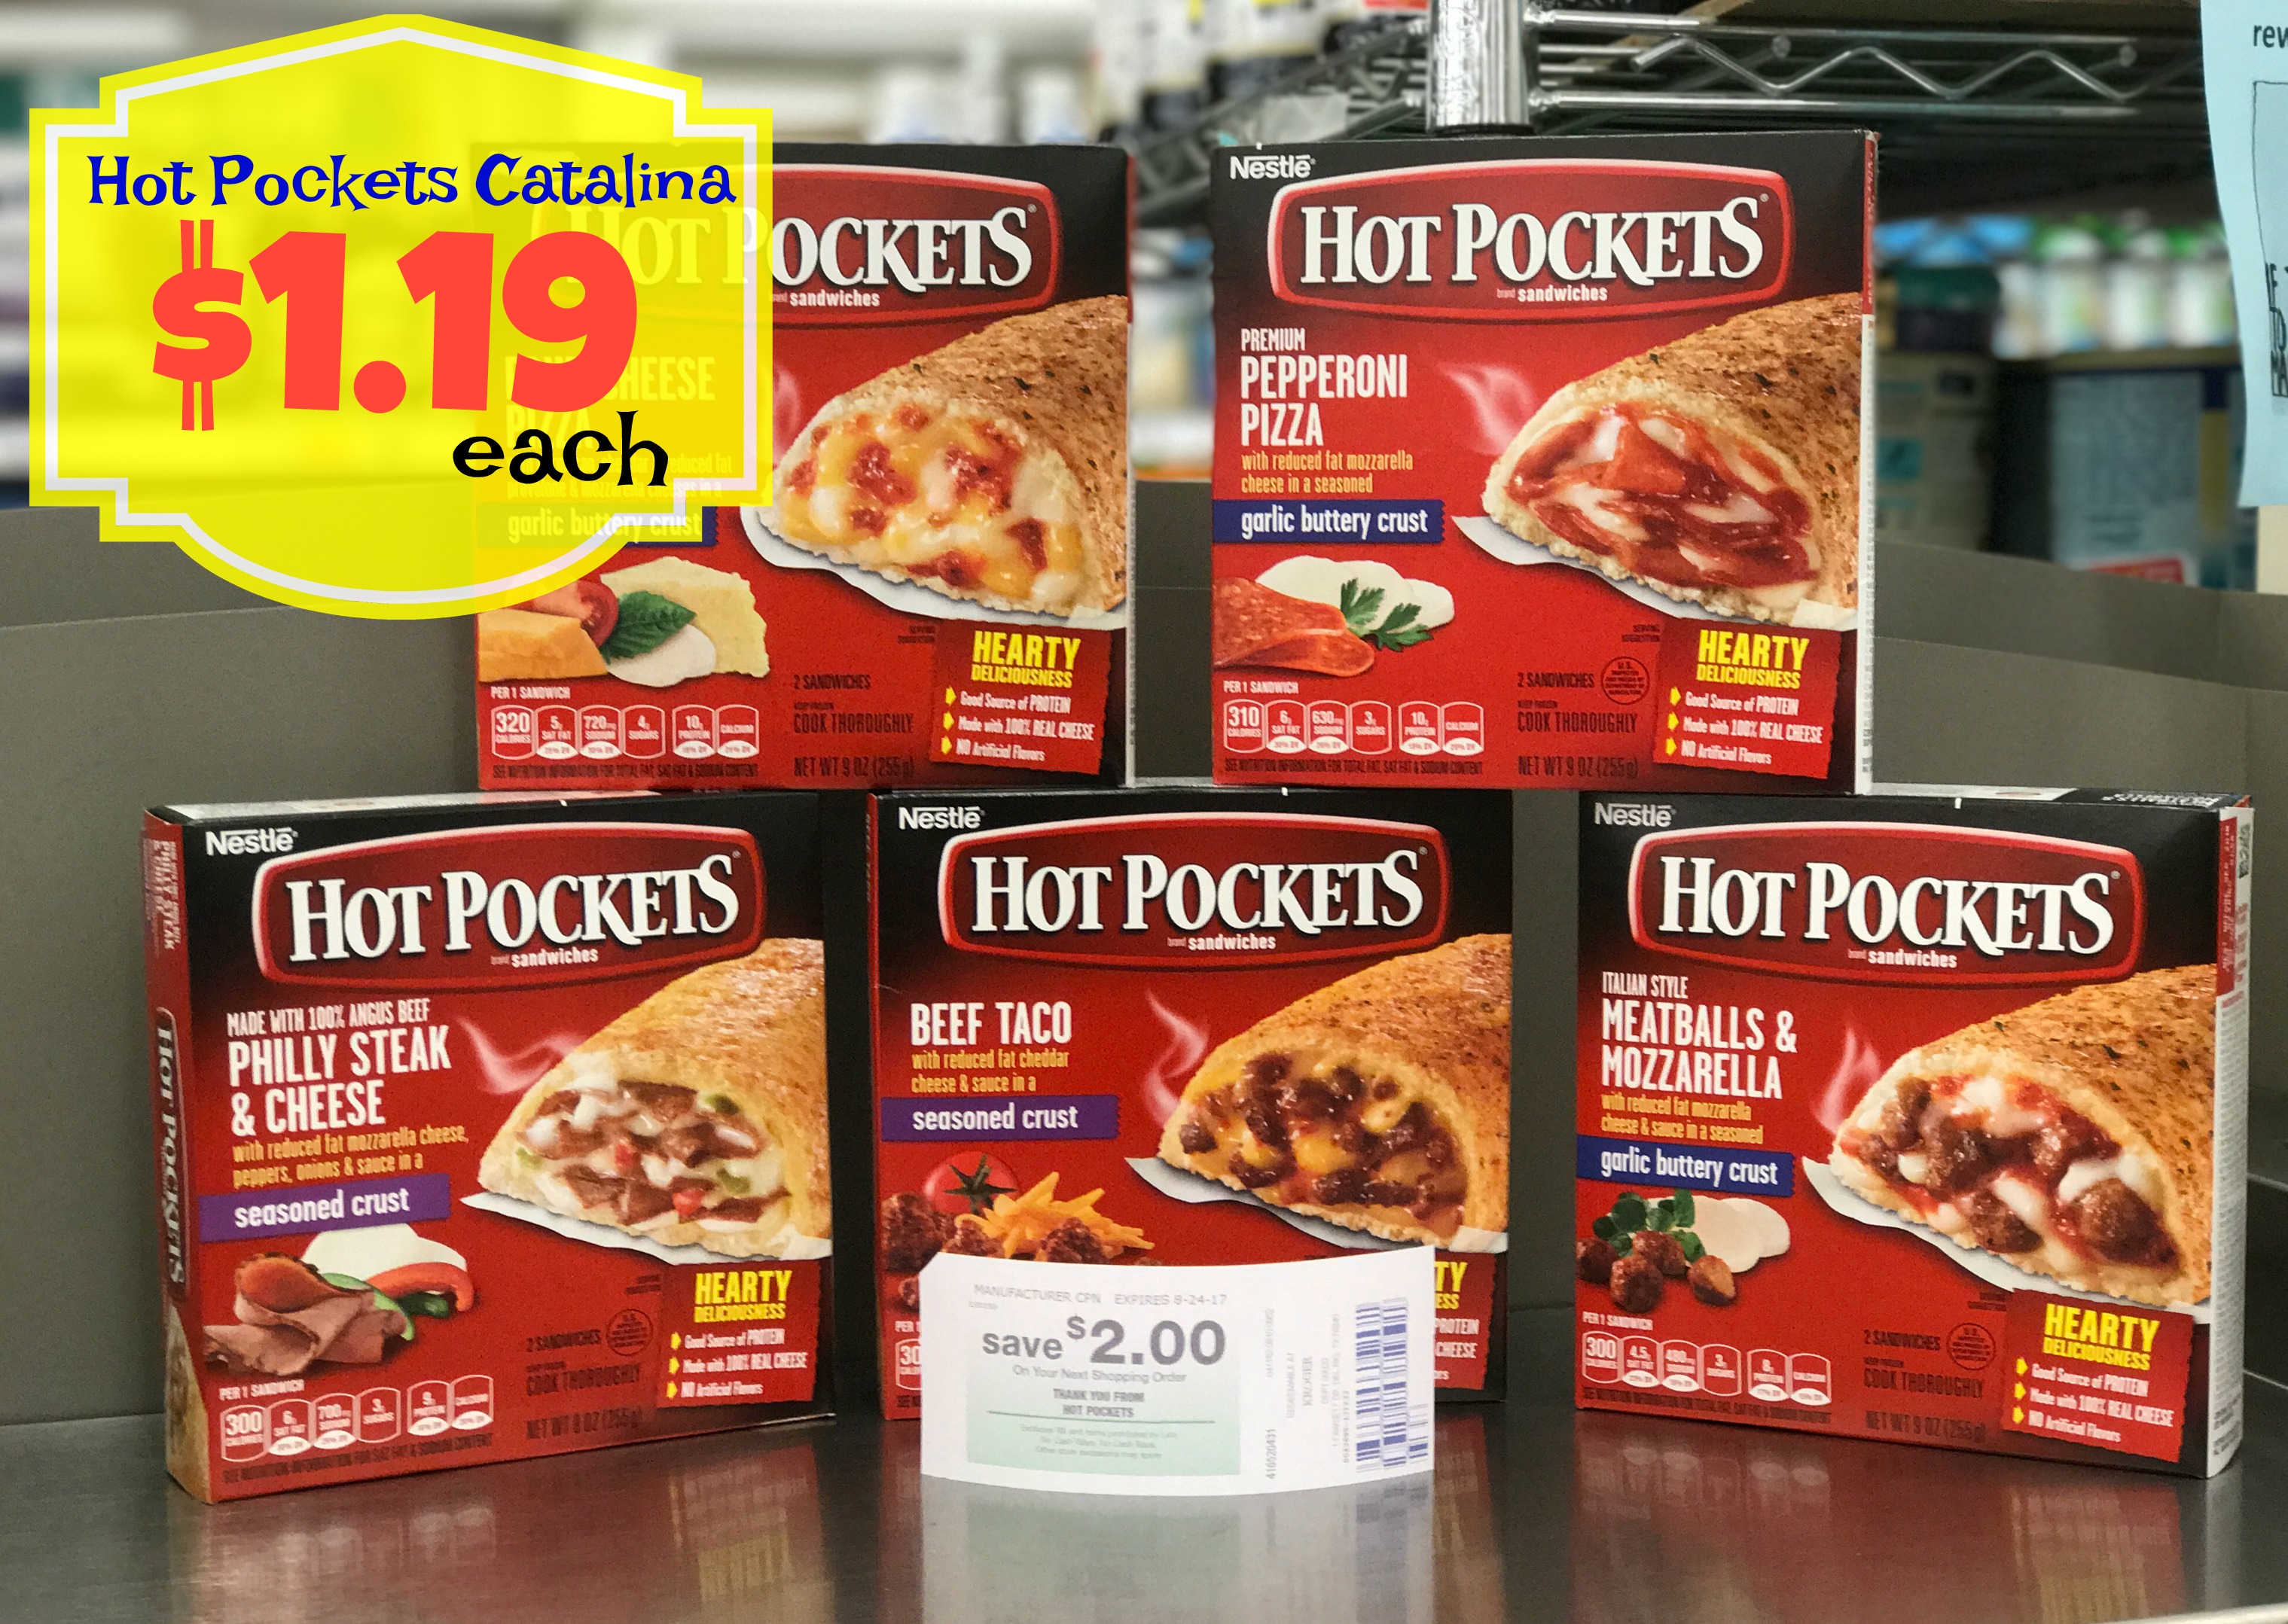 Hot Pocket Catlaina 2 Pack Sandwiches ONLY $1.19 at Kroger (Reg $2.19)! 